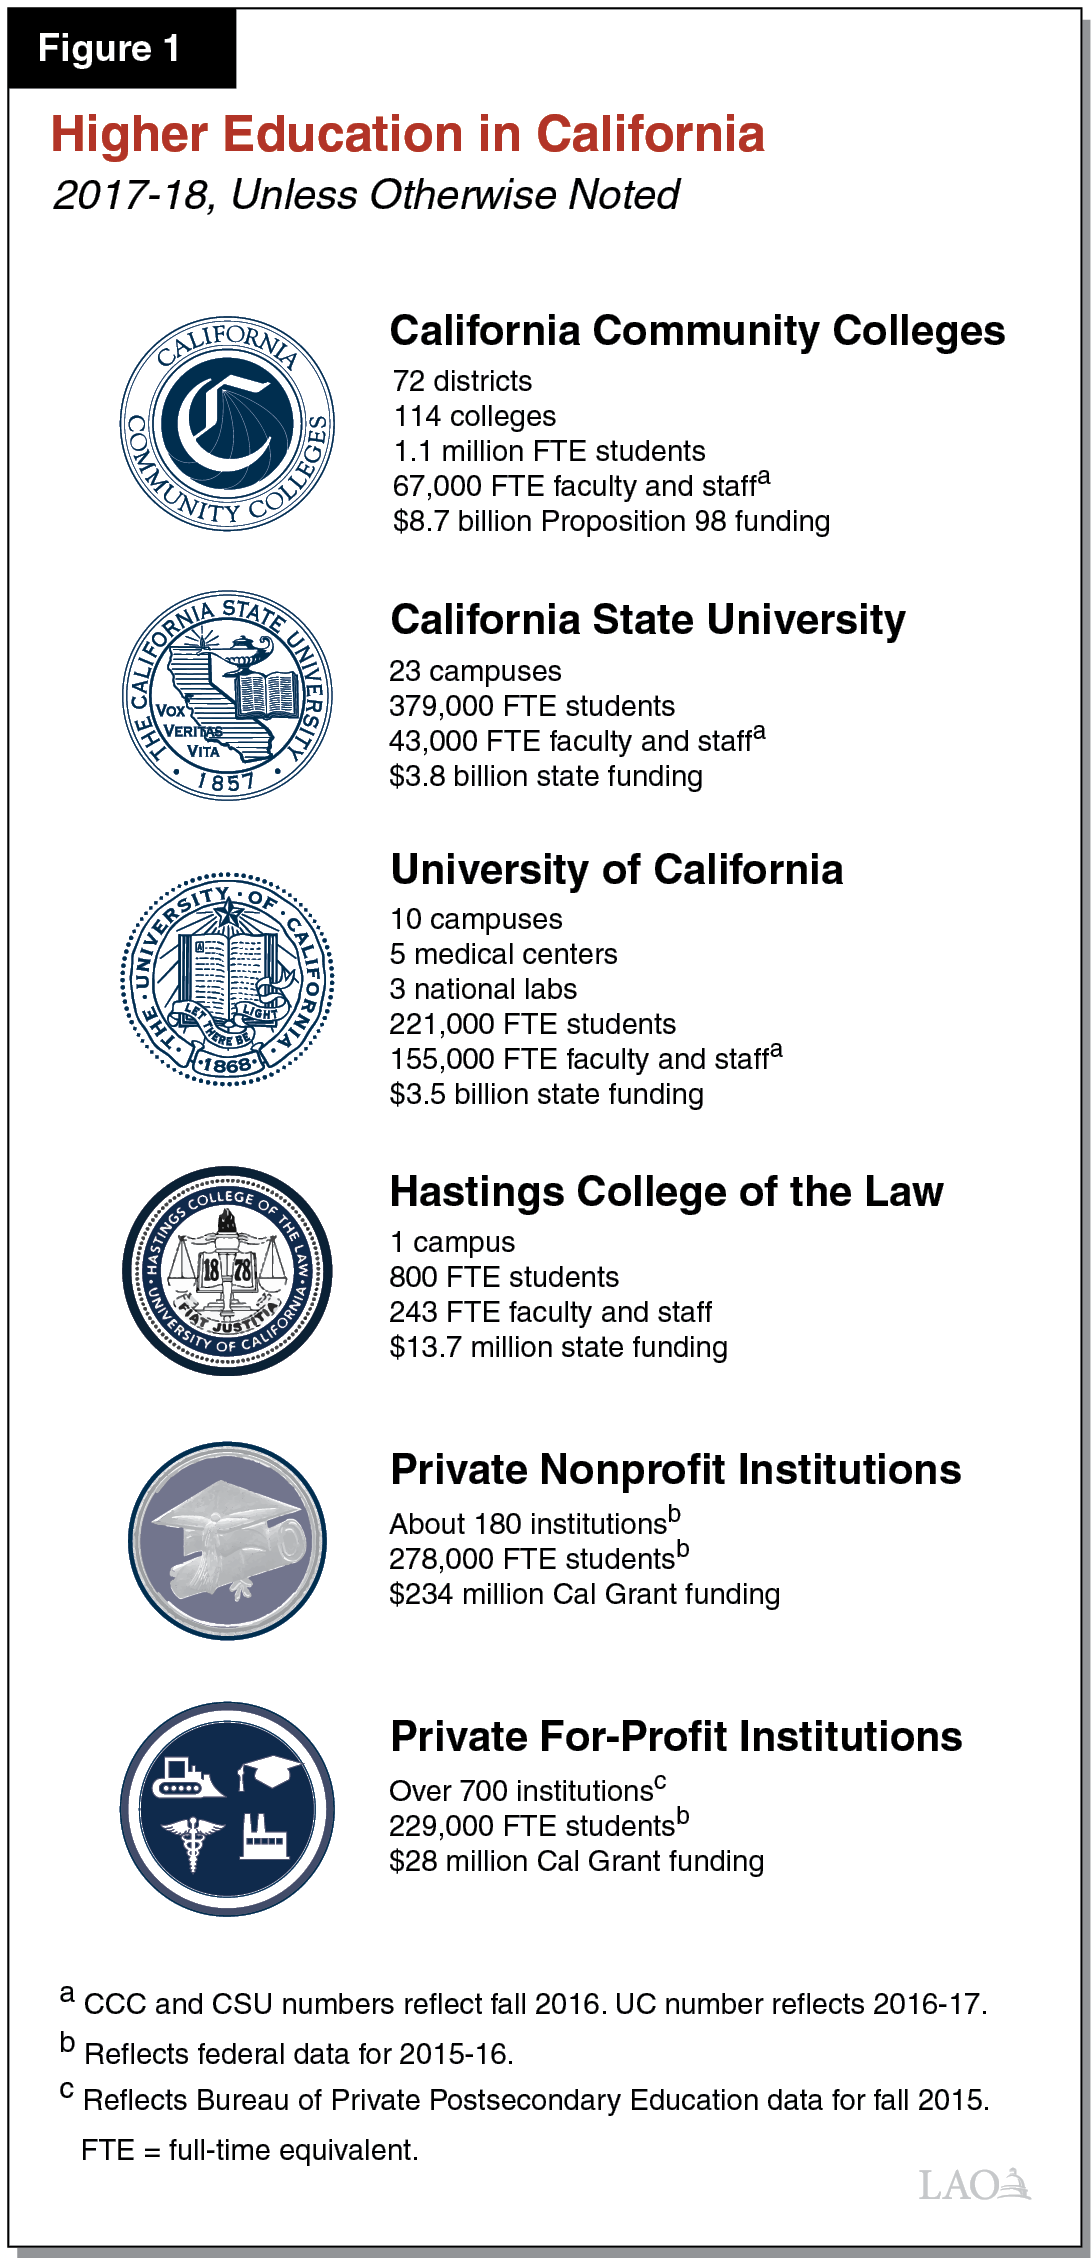 Figure 1 - Higher Education in California